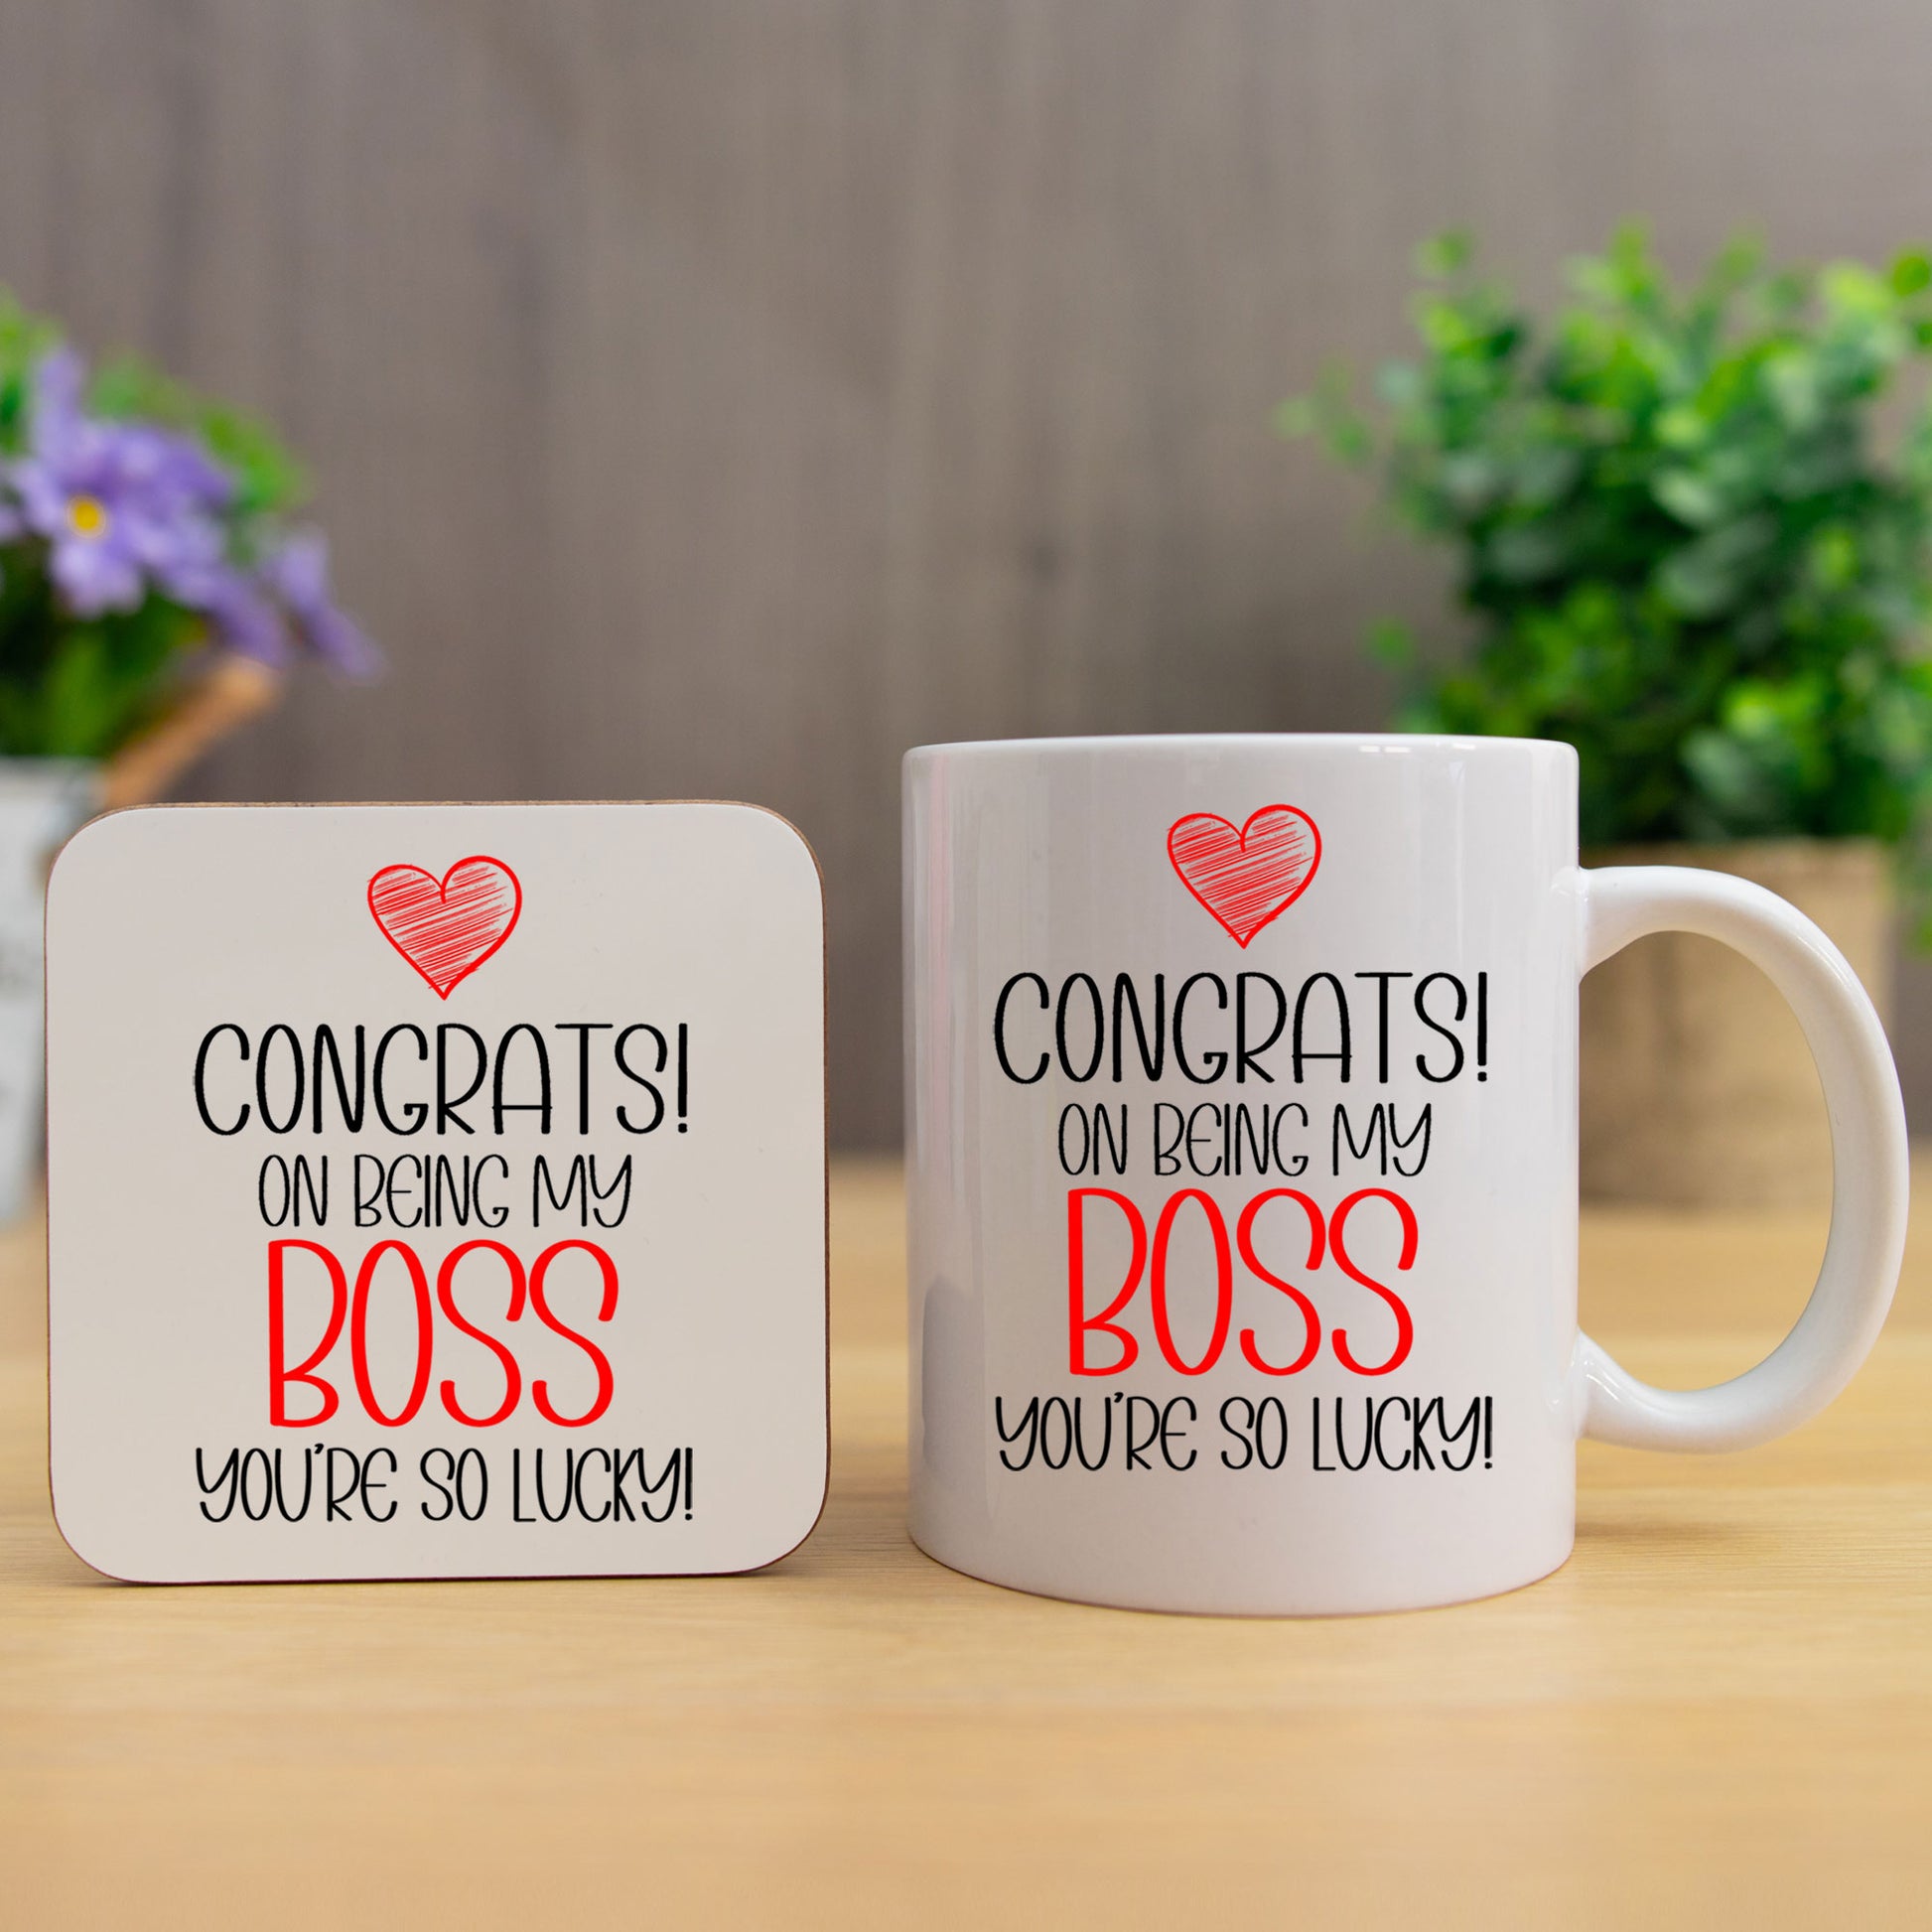 Congrats On Being My Boss Mug and/or Coaster Gift  - Always Looking Good - So Lucky Mug & Coaster Set  